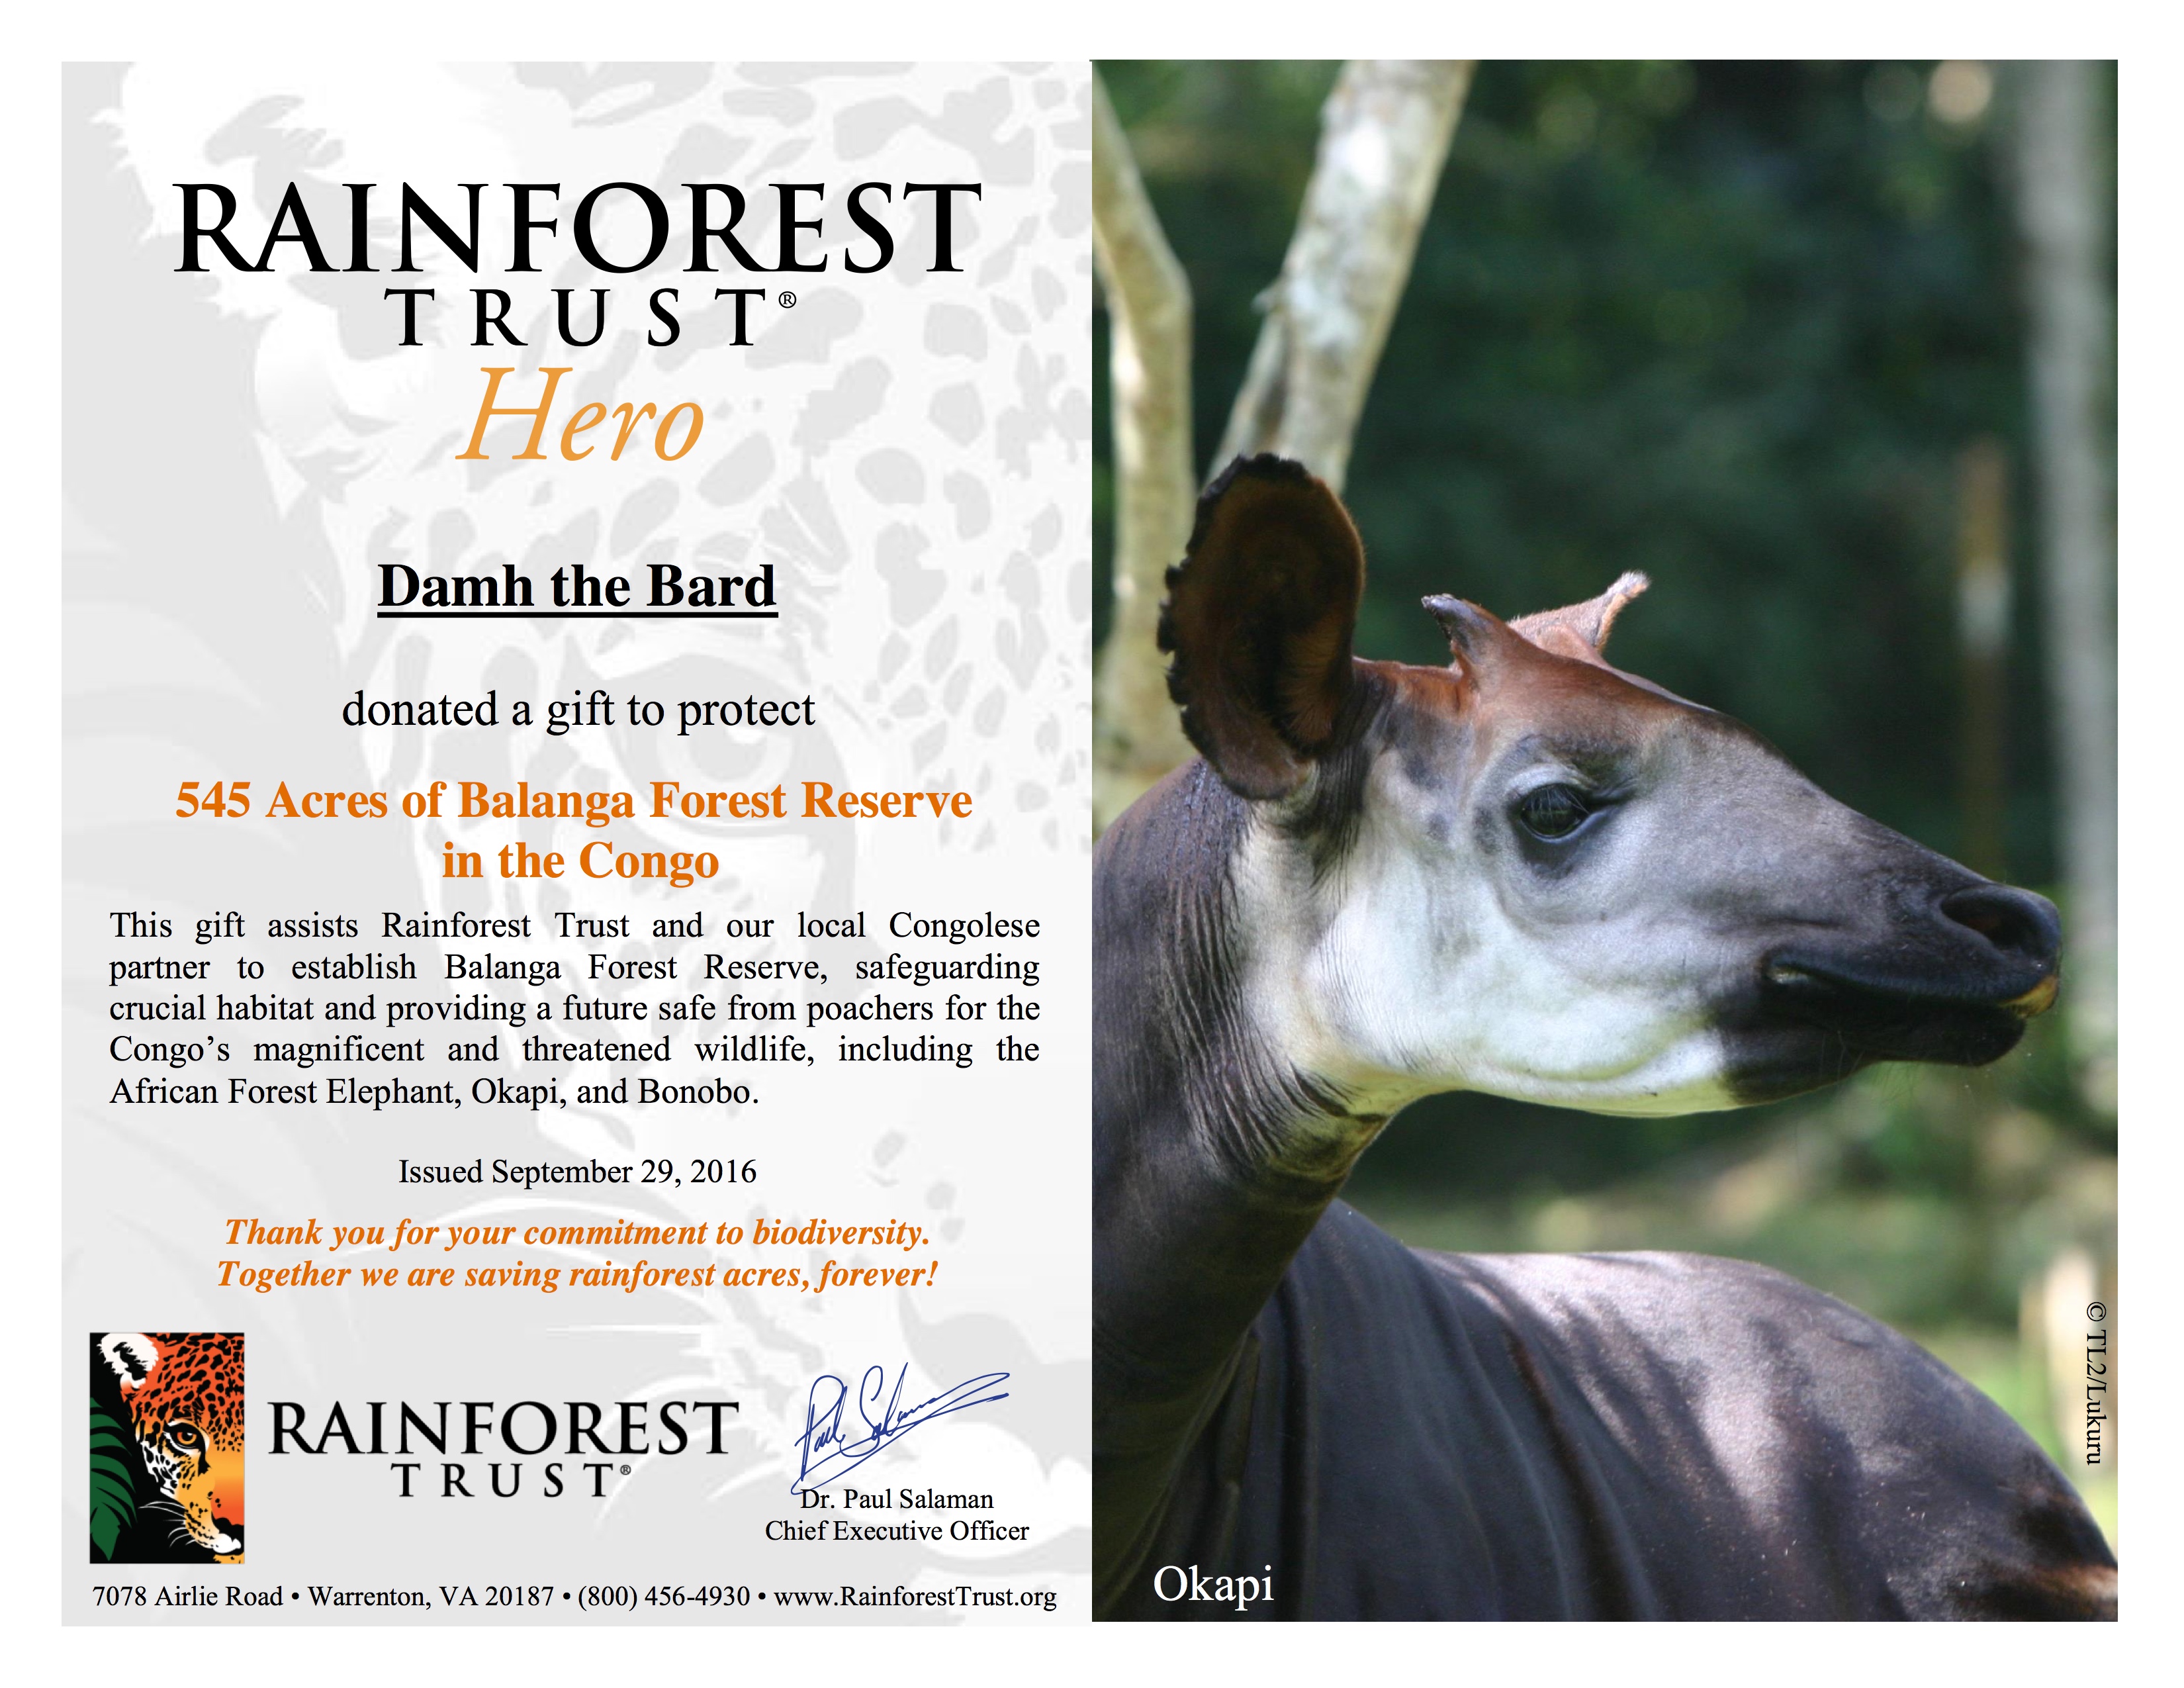 Good News for the Rainforest